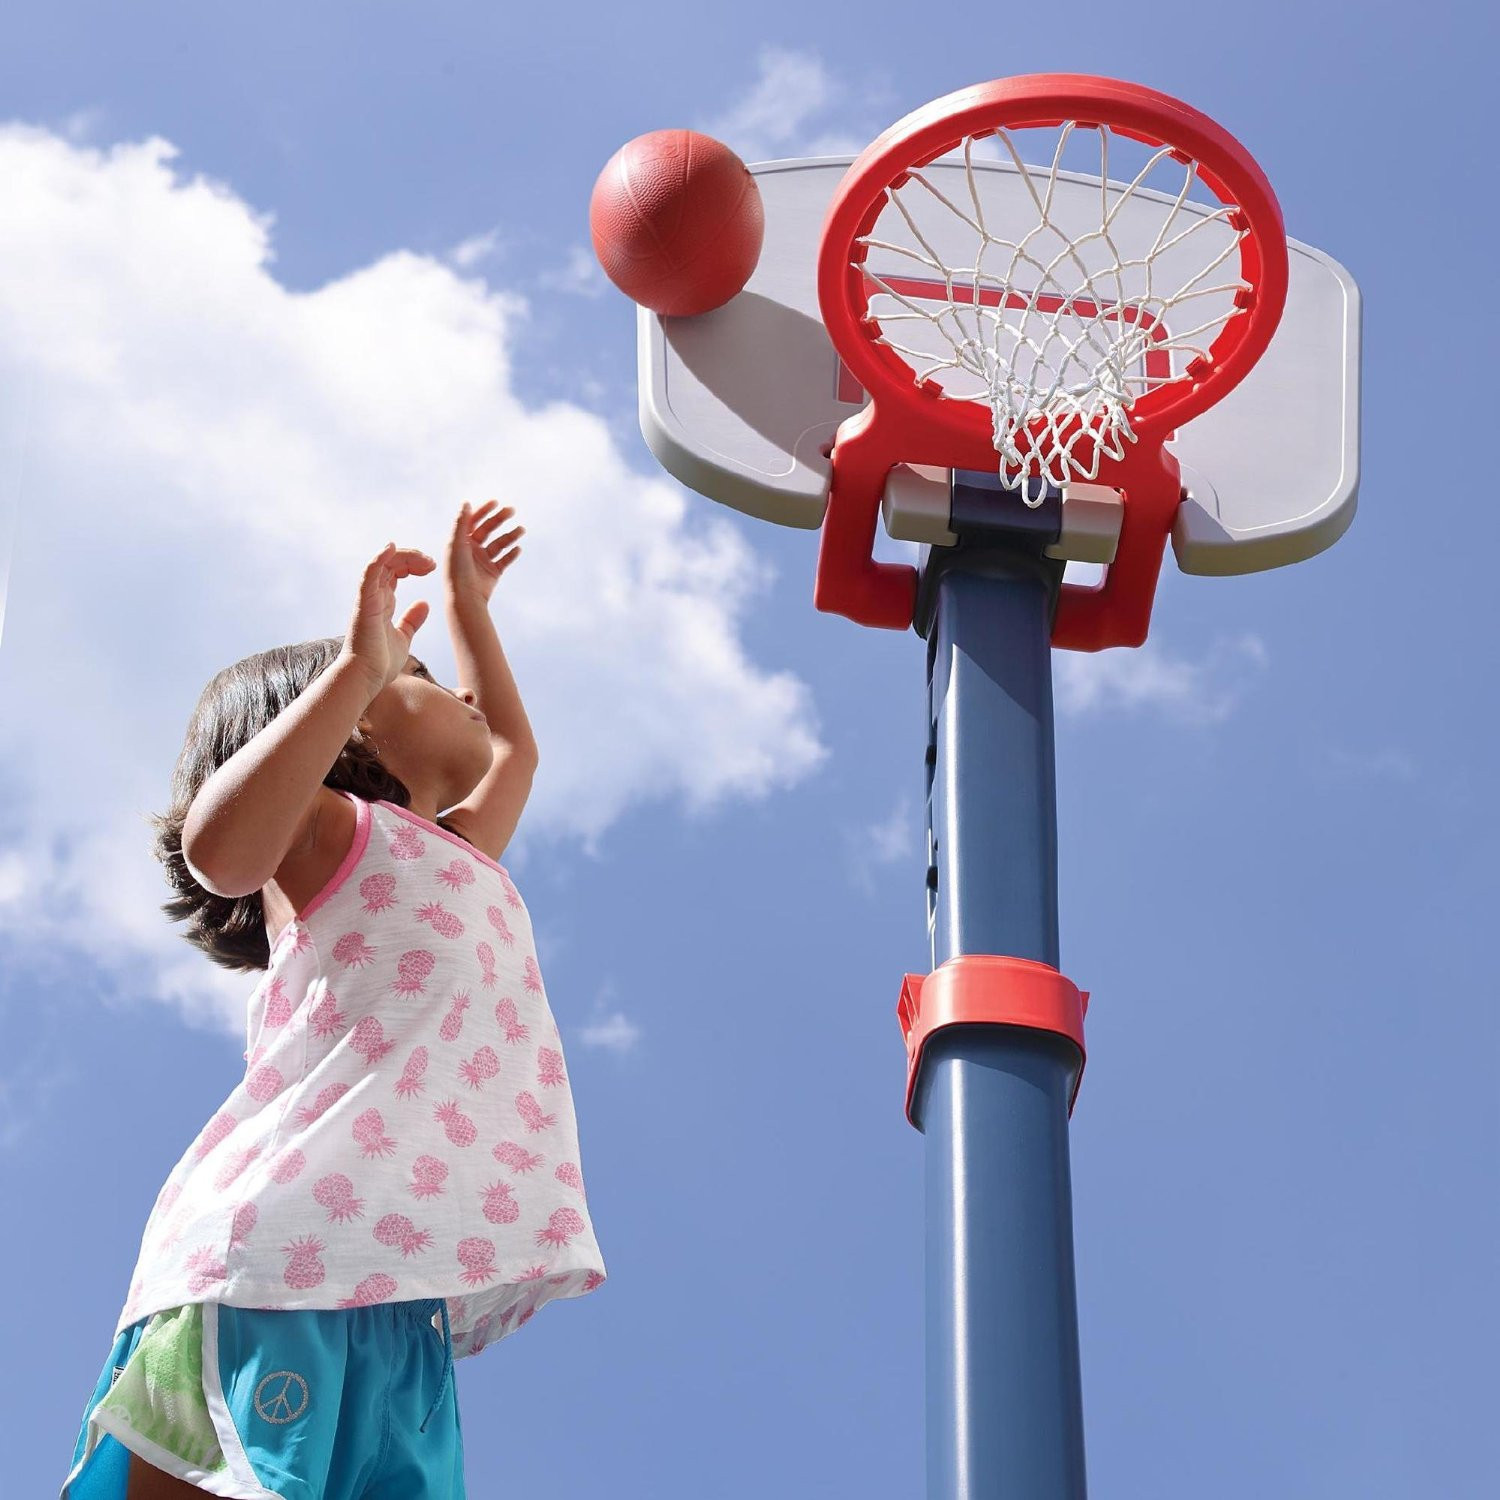 Kids Indoor Basketball Goal
 Buy Adjustable Basketball Hoop For Kids Indoor Outdoor